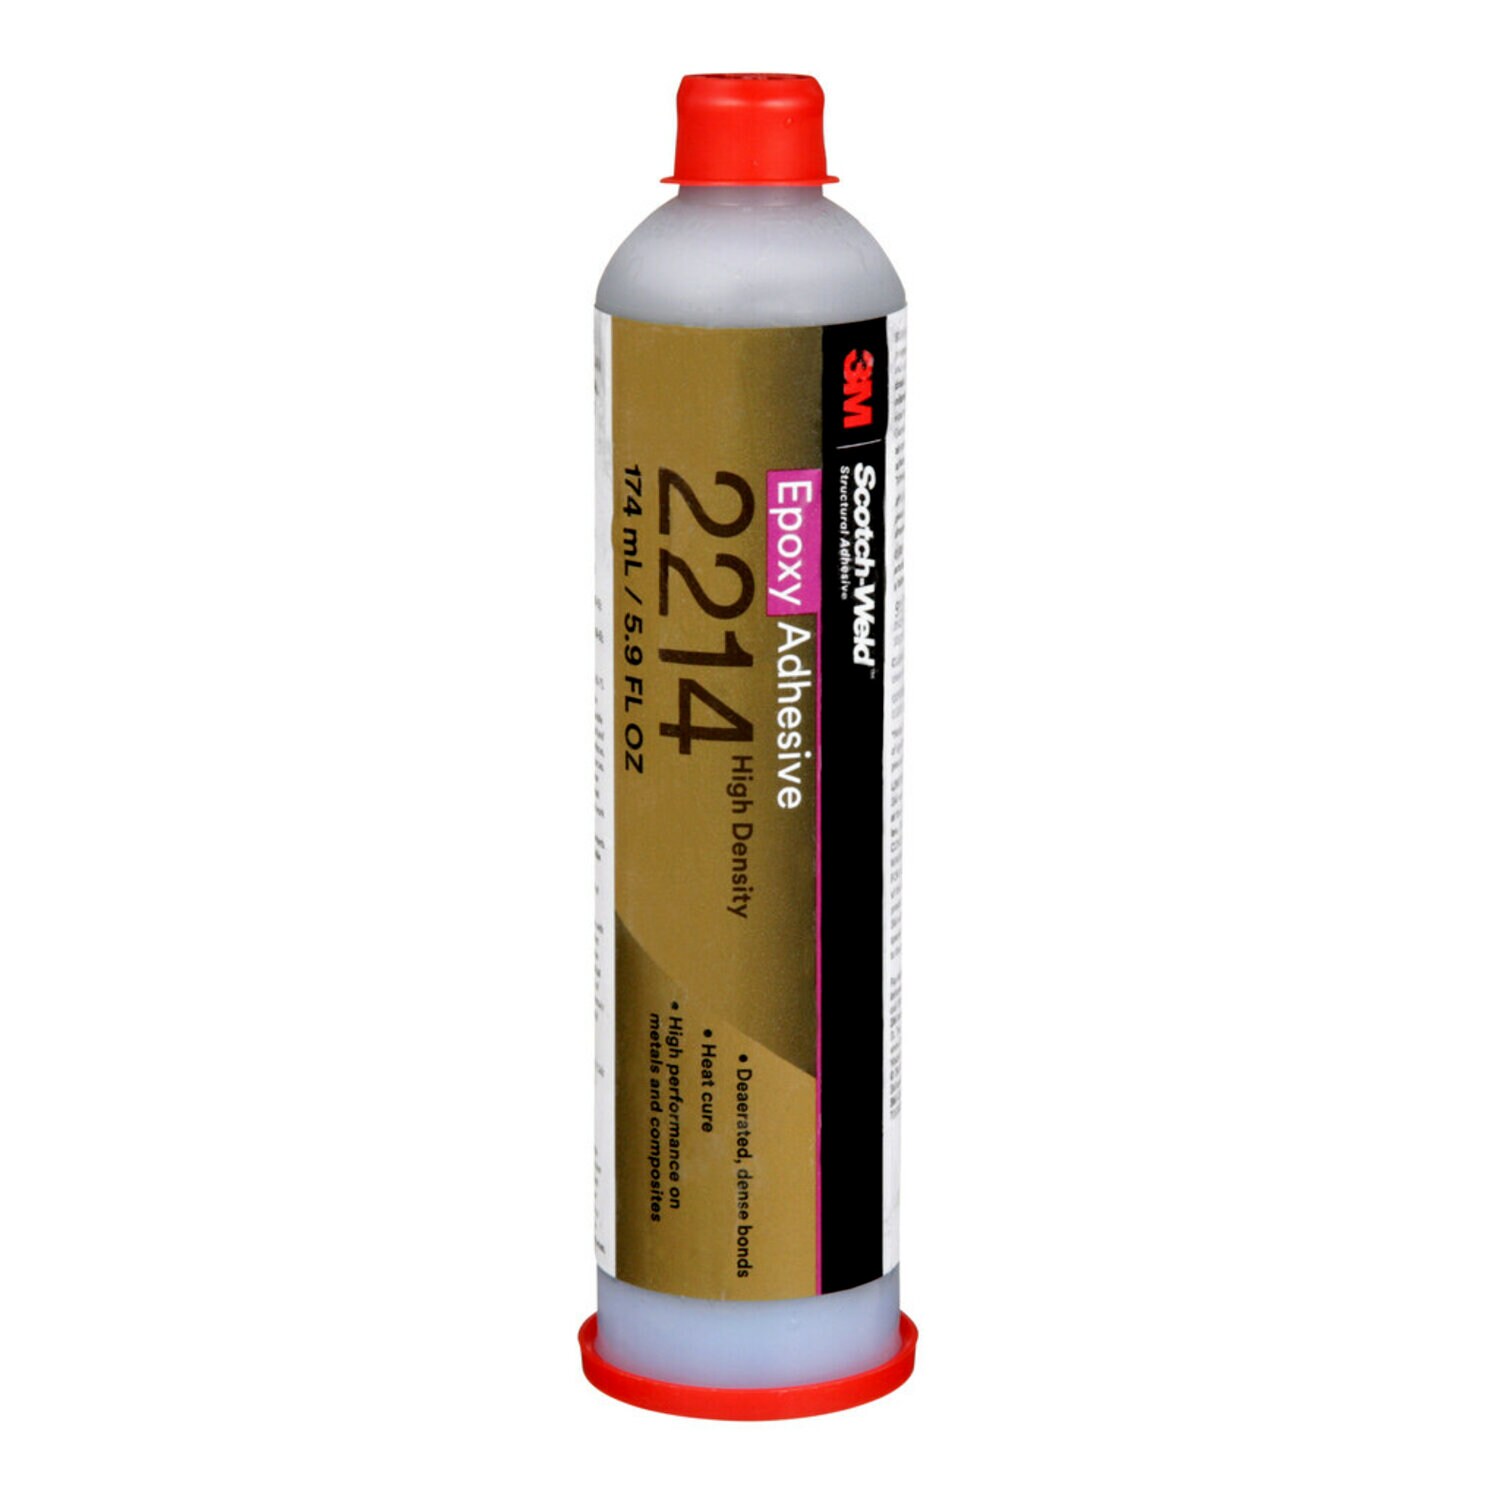 7000021289 - 3M Scotch-Weld Epoxy Adhesive 2214, Hi-Density, Gray, 6 fl oz
Cartridge, 6 Each/Case